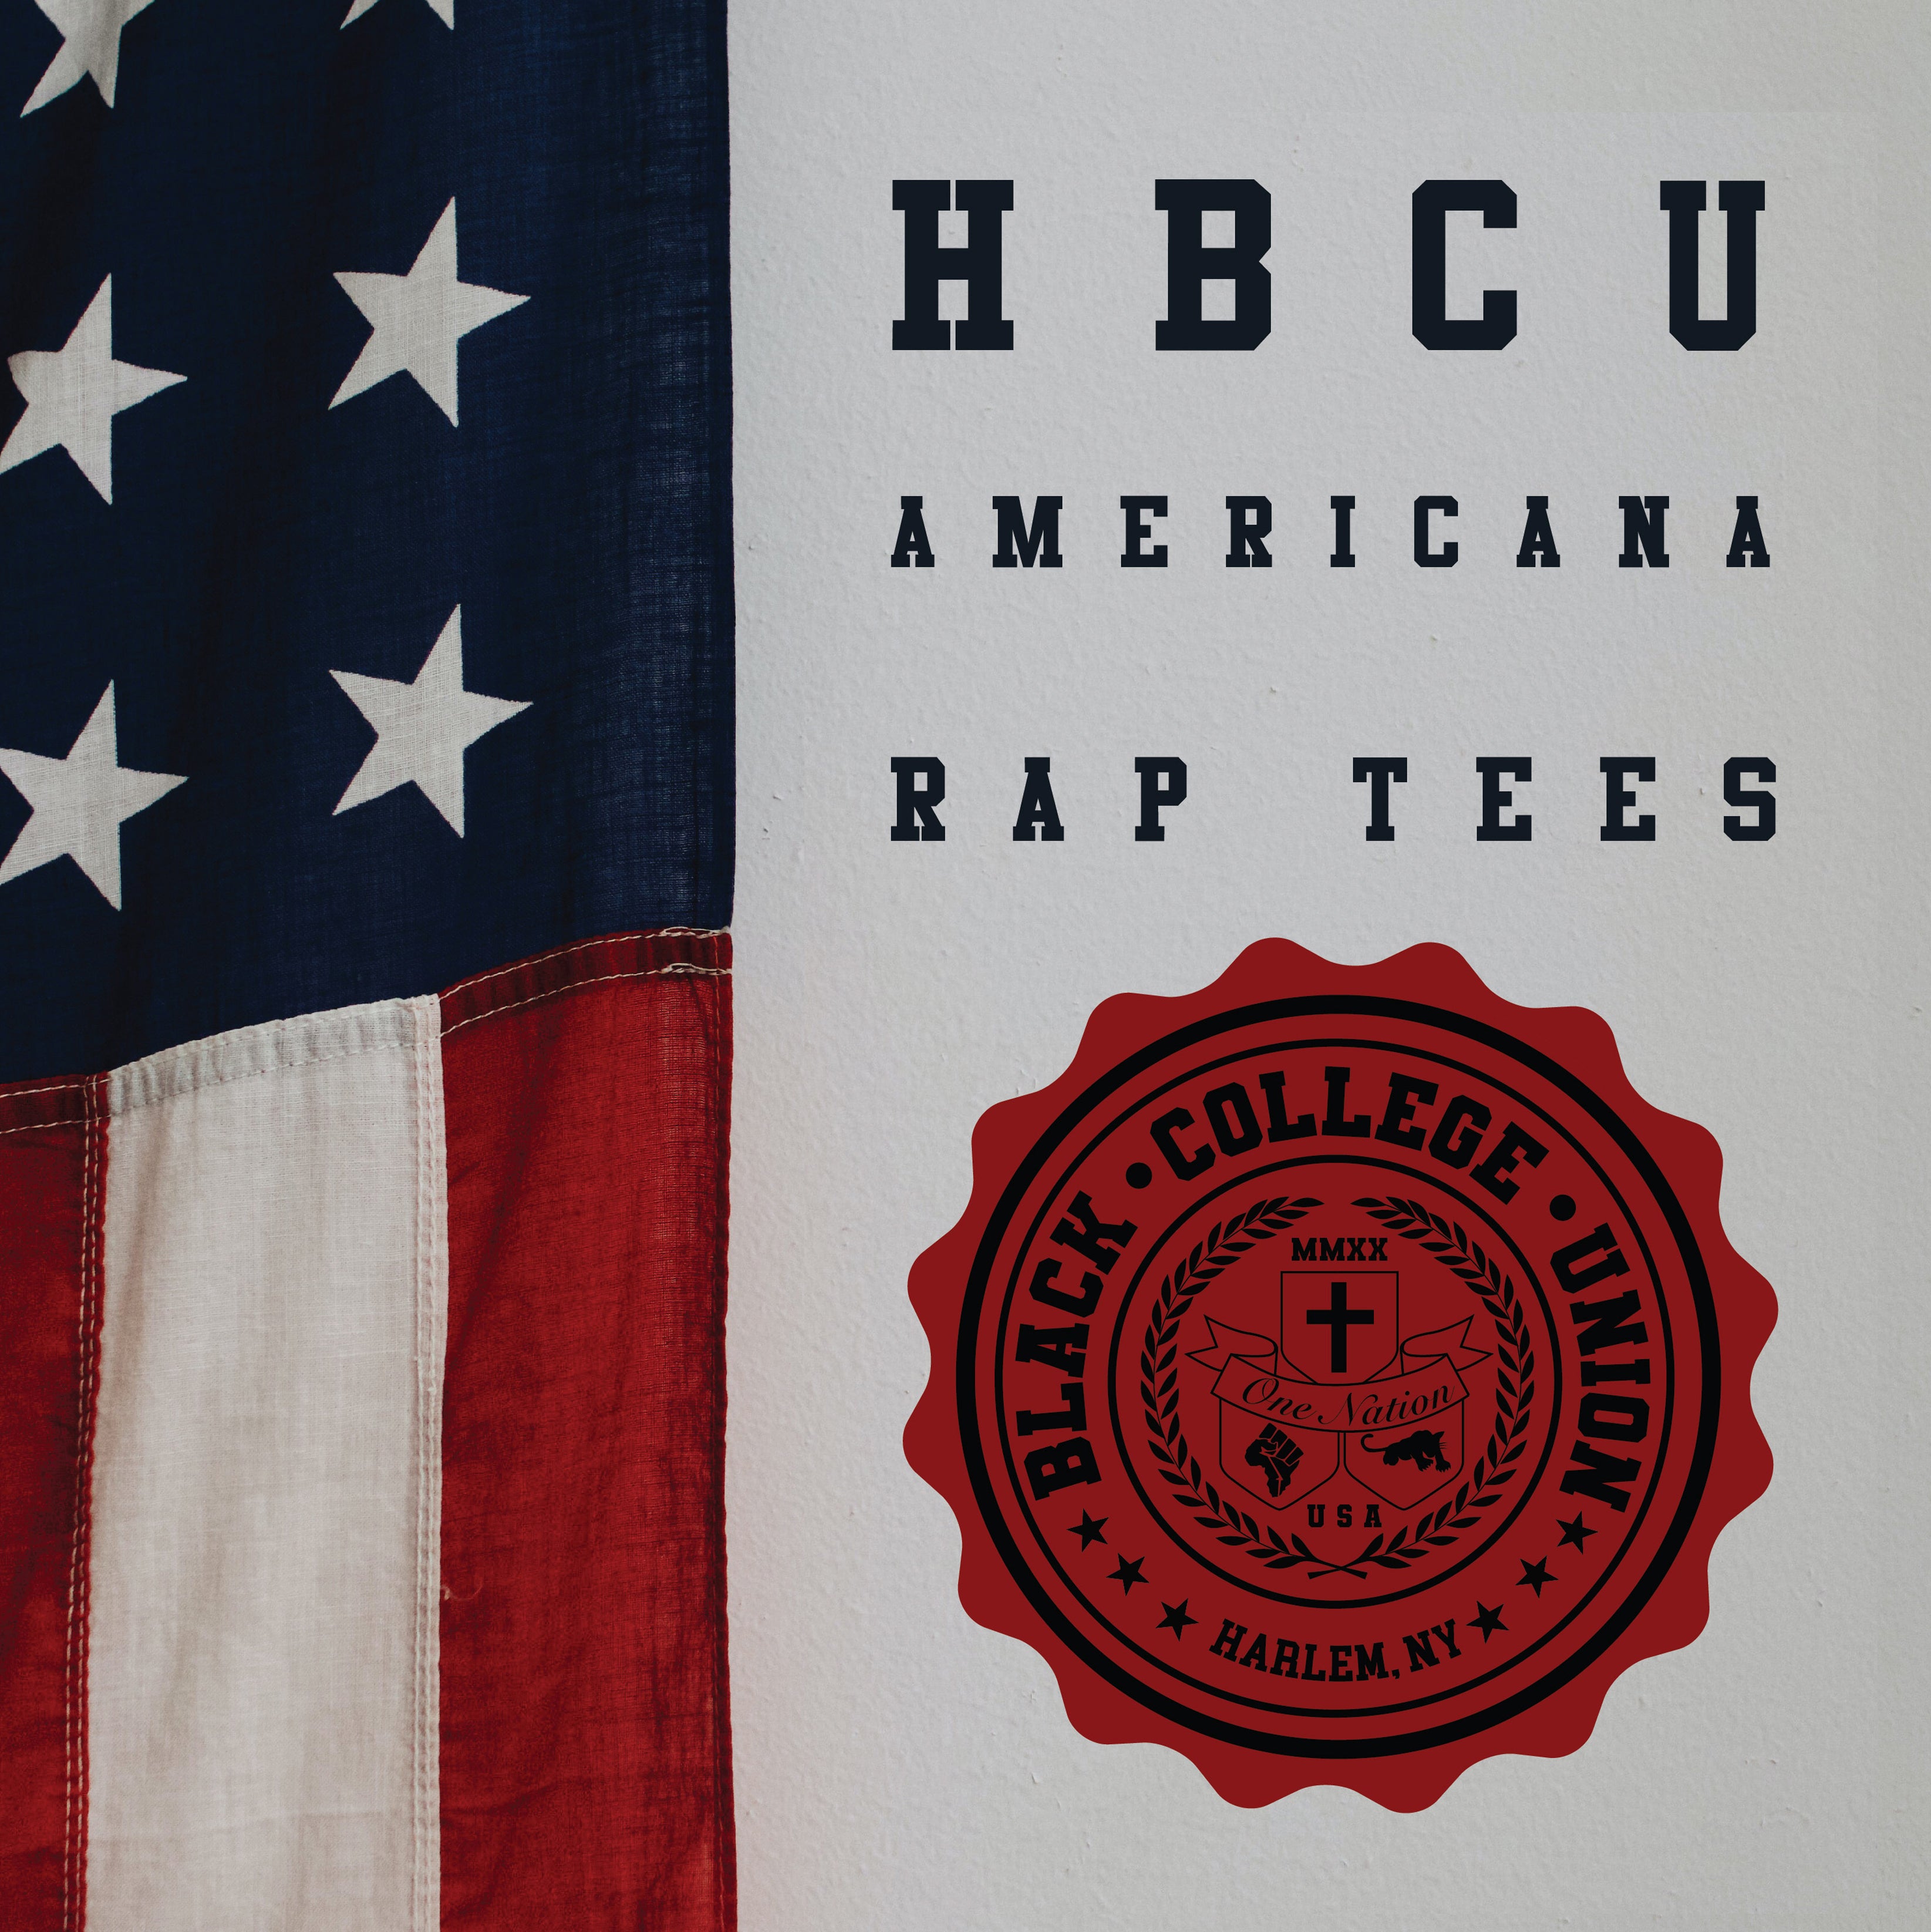 BCU X Champion Original HBCU Americana Rap Tee - Tuskegee [TU]